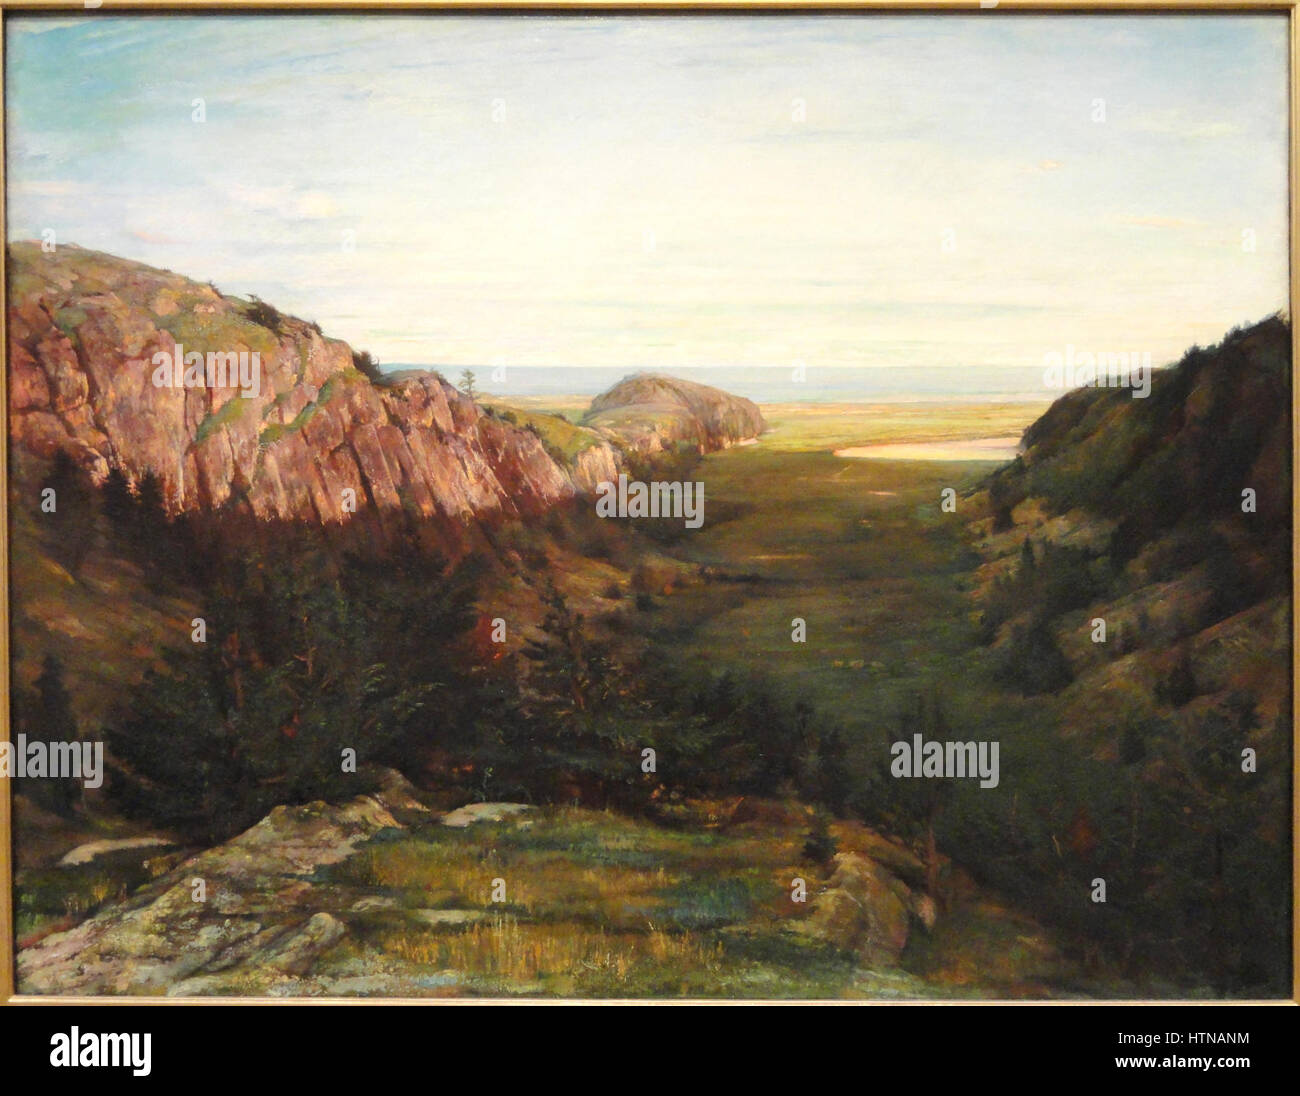 The Last Valley - Paradise Rocks, by John La Farge, 1867-1868, oil on canvas - National Gallery of Art, Washington - DSC00068 Stock Photo